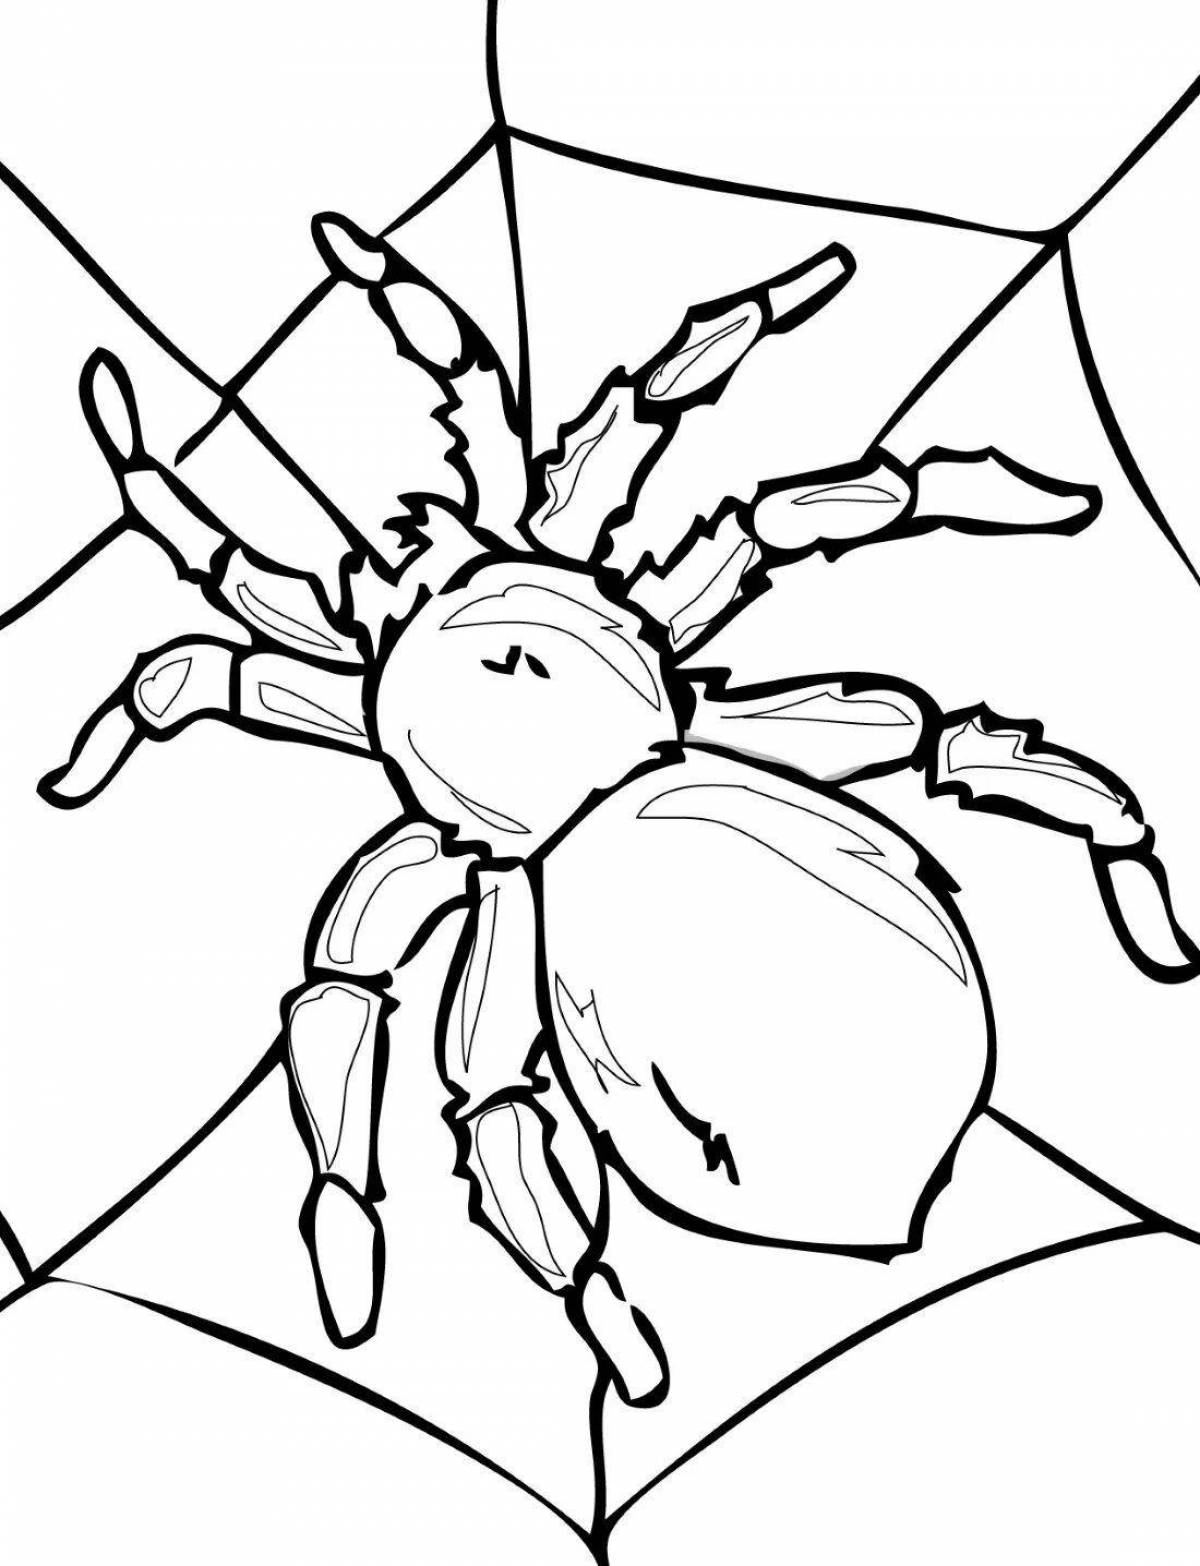 Impressive spider tarantula coloring page